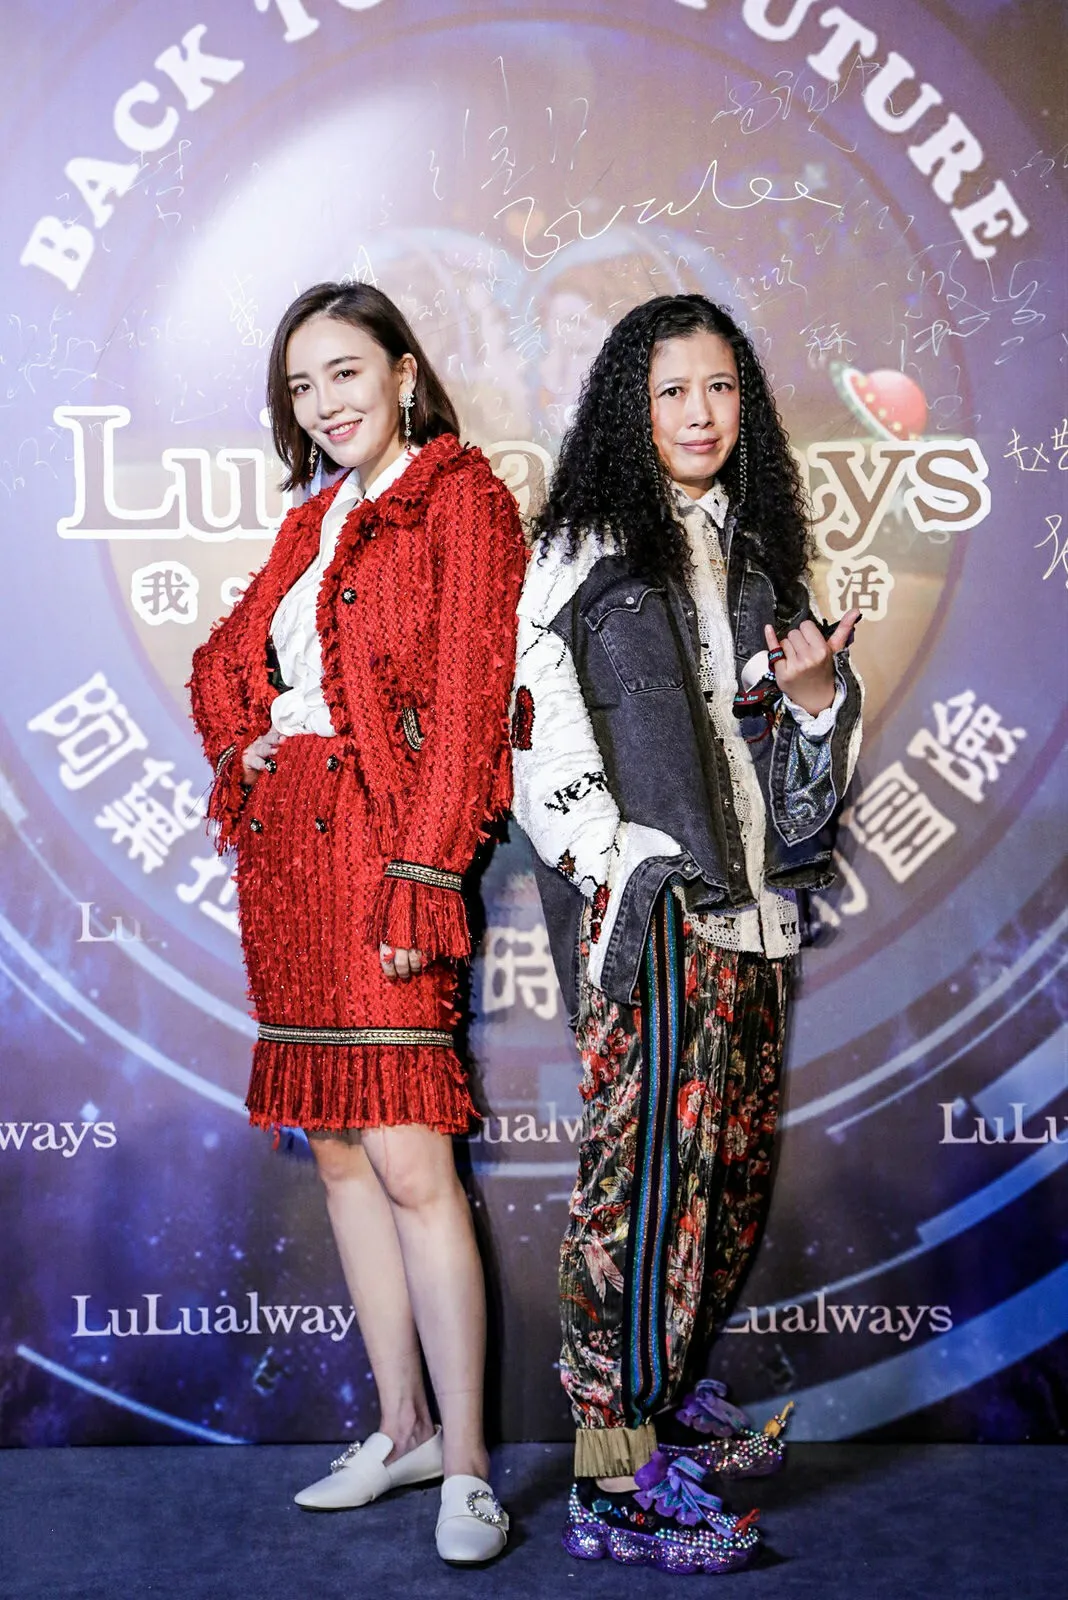 Jiarong Lv invited for autumn/winter Shanghai fashion week. JPG